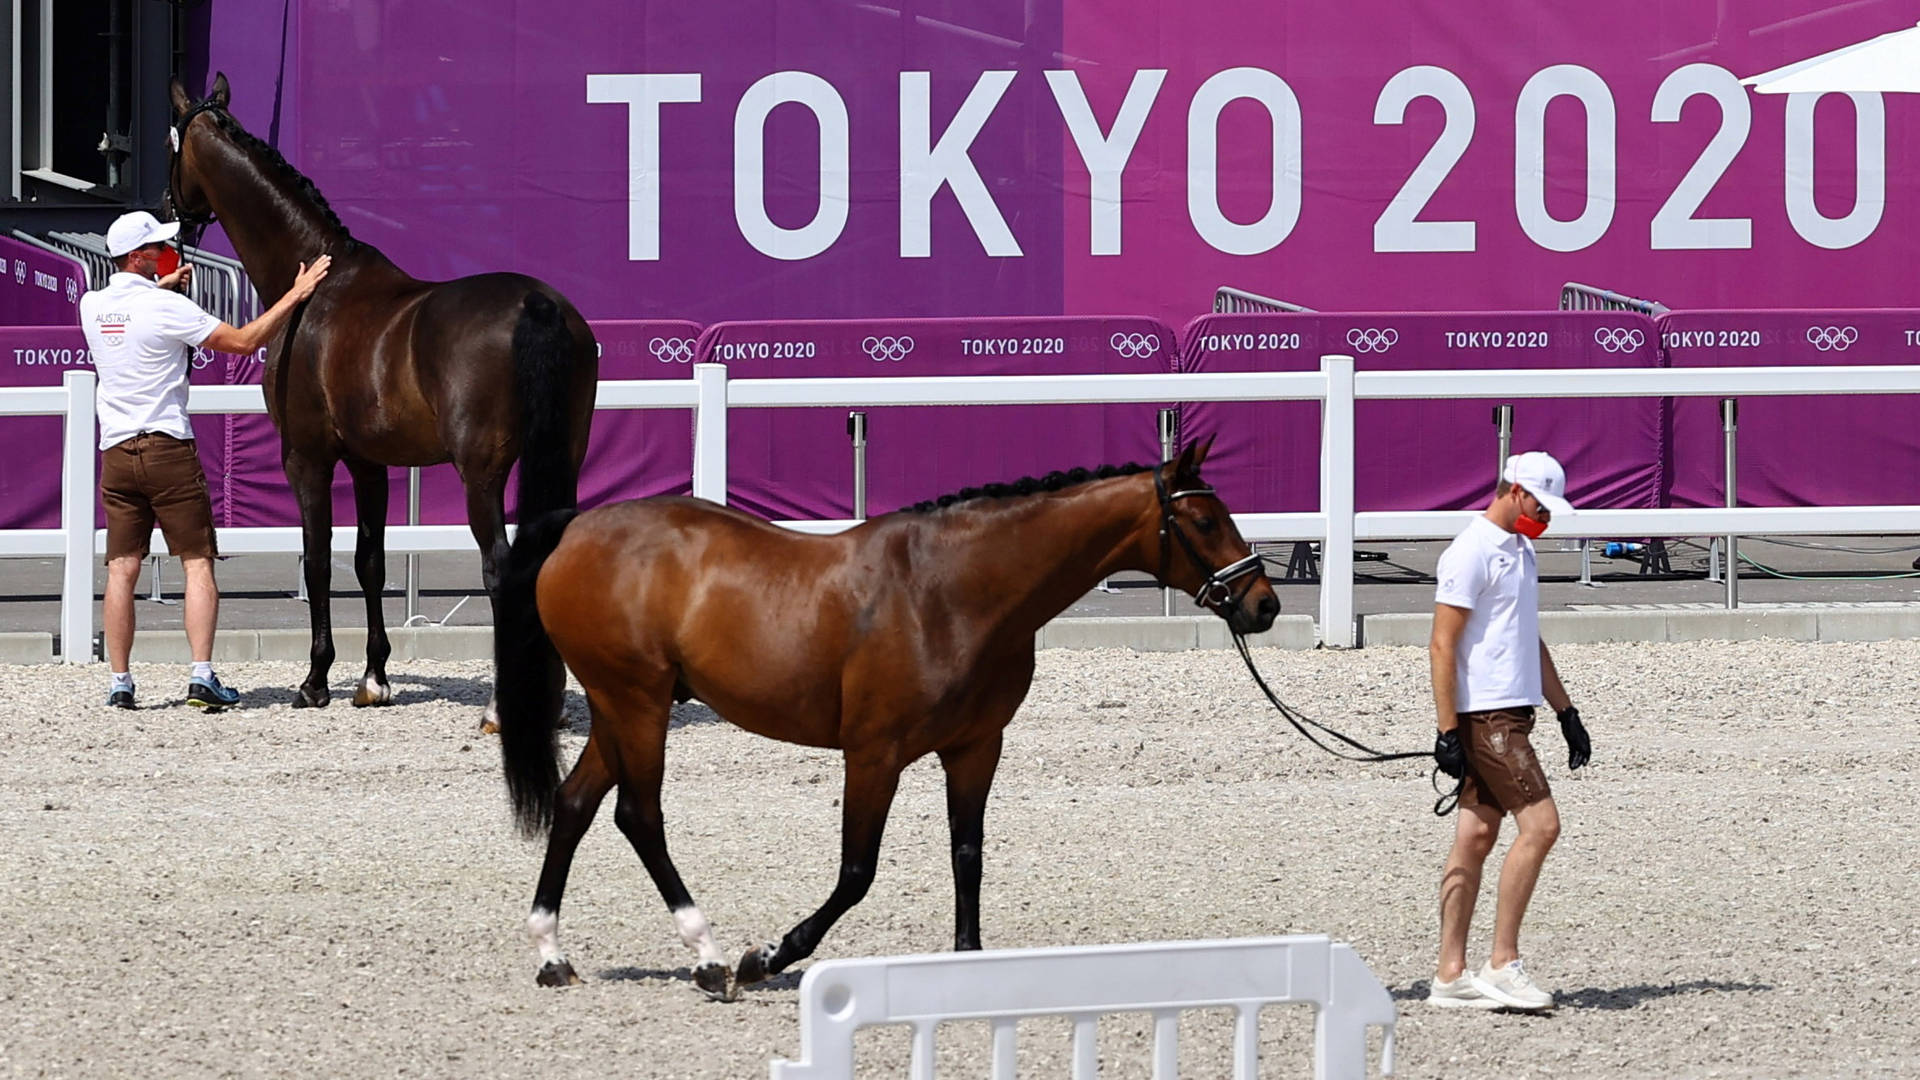 Equestrian Dressage Horse Inspection Tokyo 2020 Olympics Wallpaper